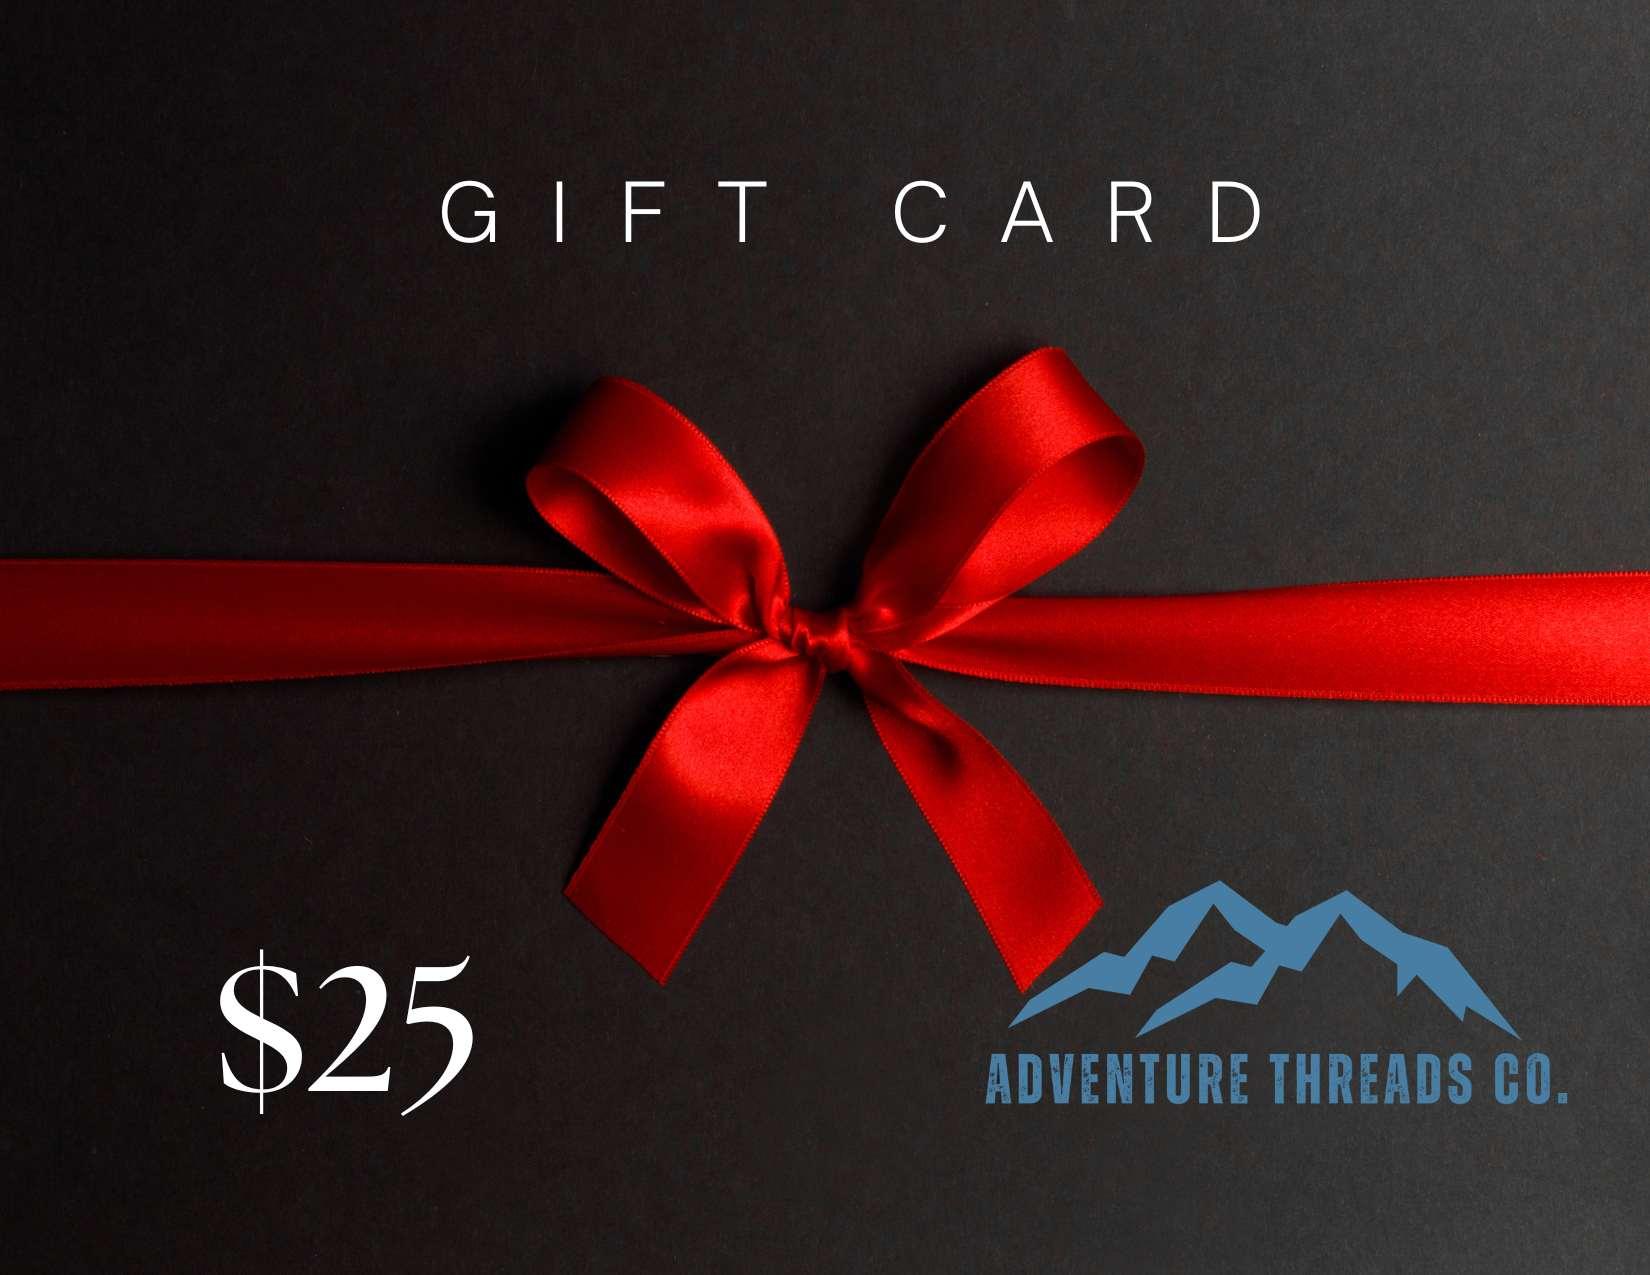 Adventure Threads Company Gift Card - Adventure Threads Company